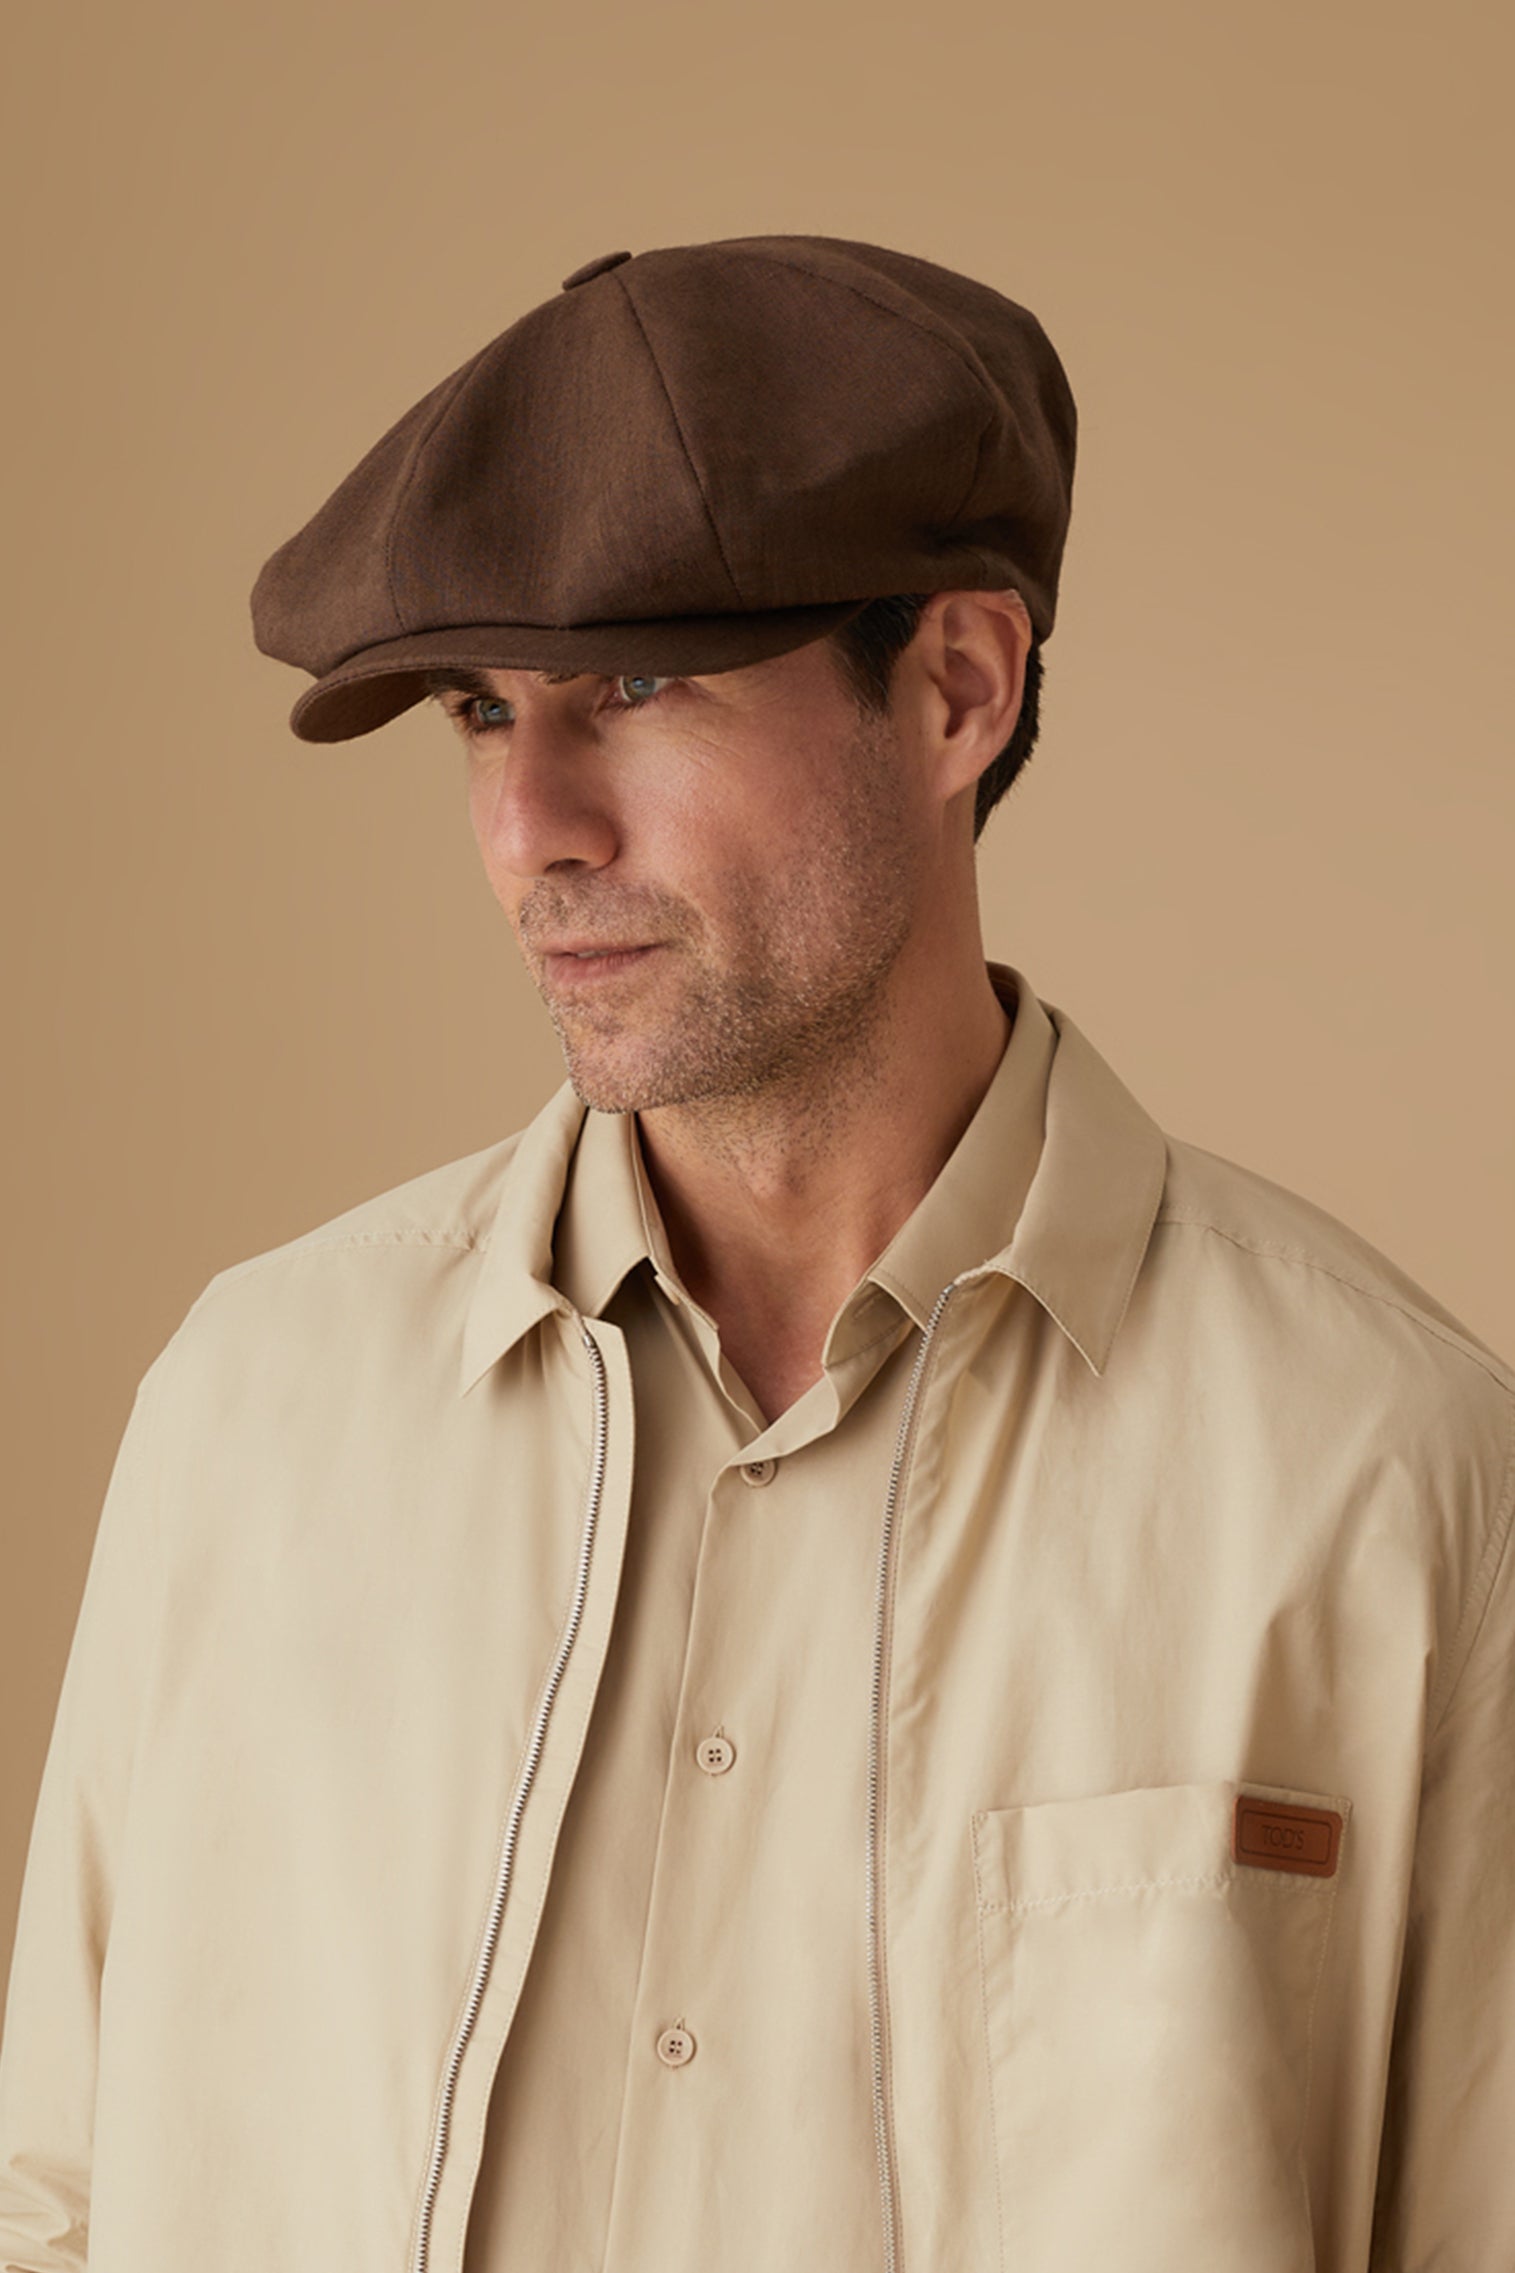 Muirfield Brown Bakerboy Cap - Hats for Tall People - Lock & Co. Hatters London UK